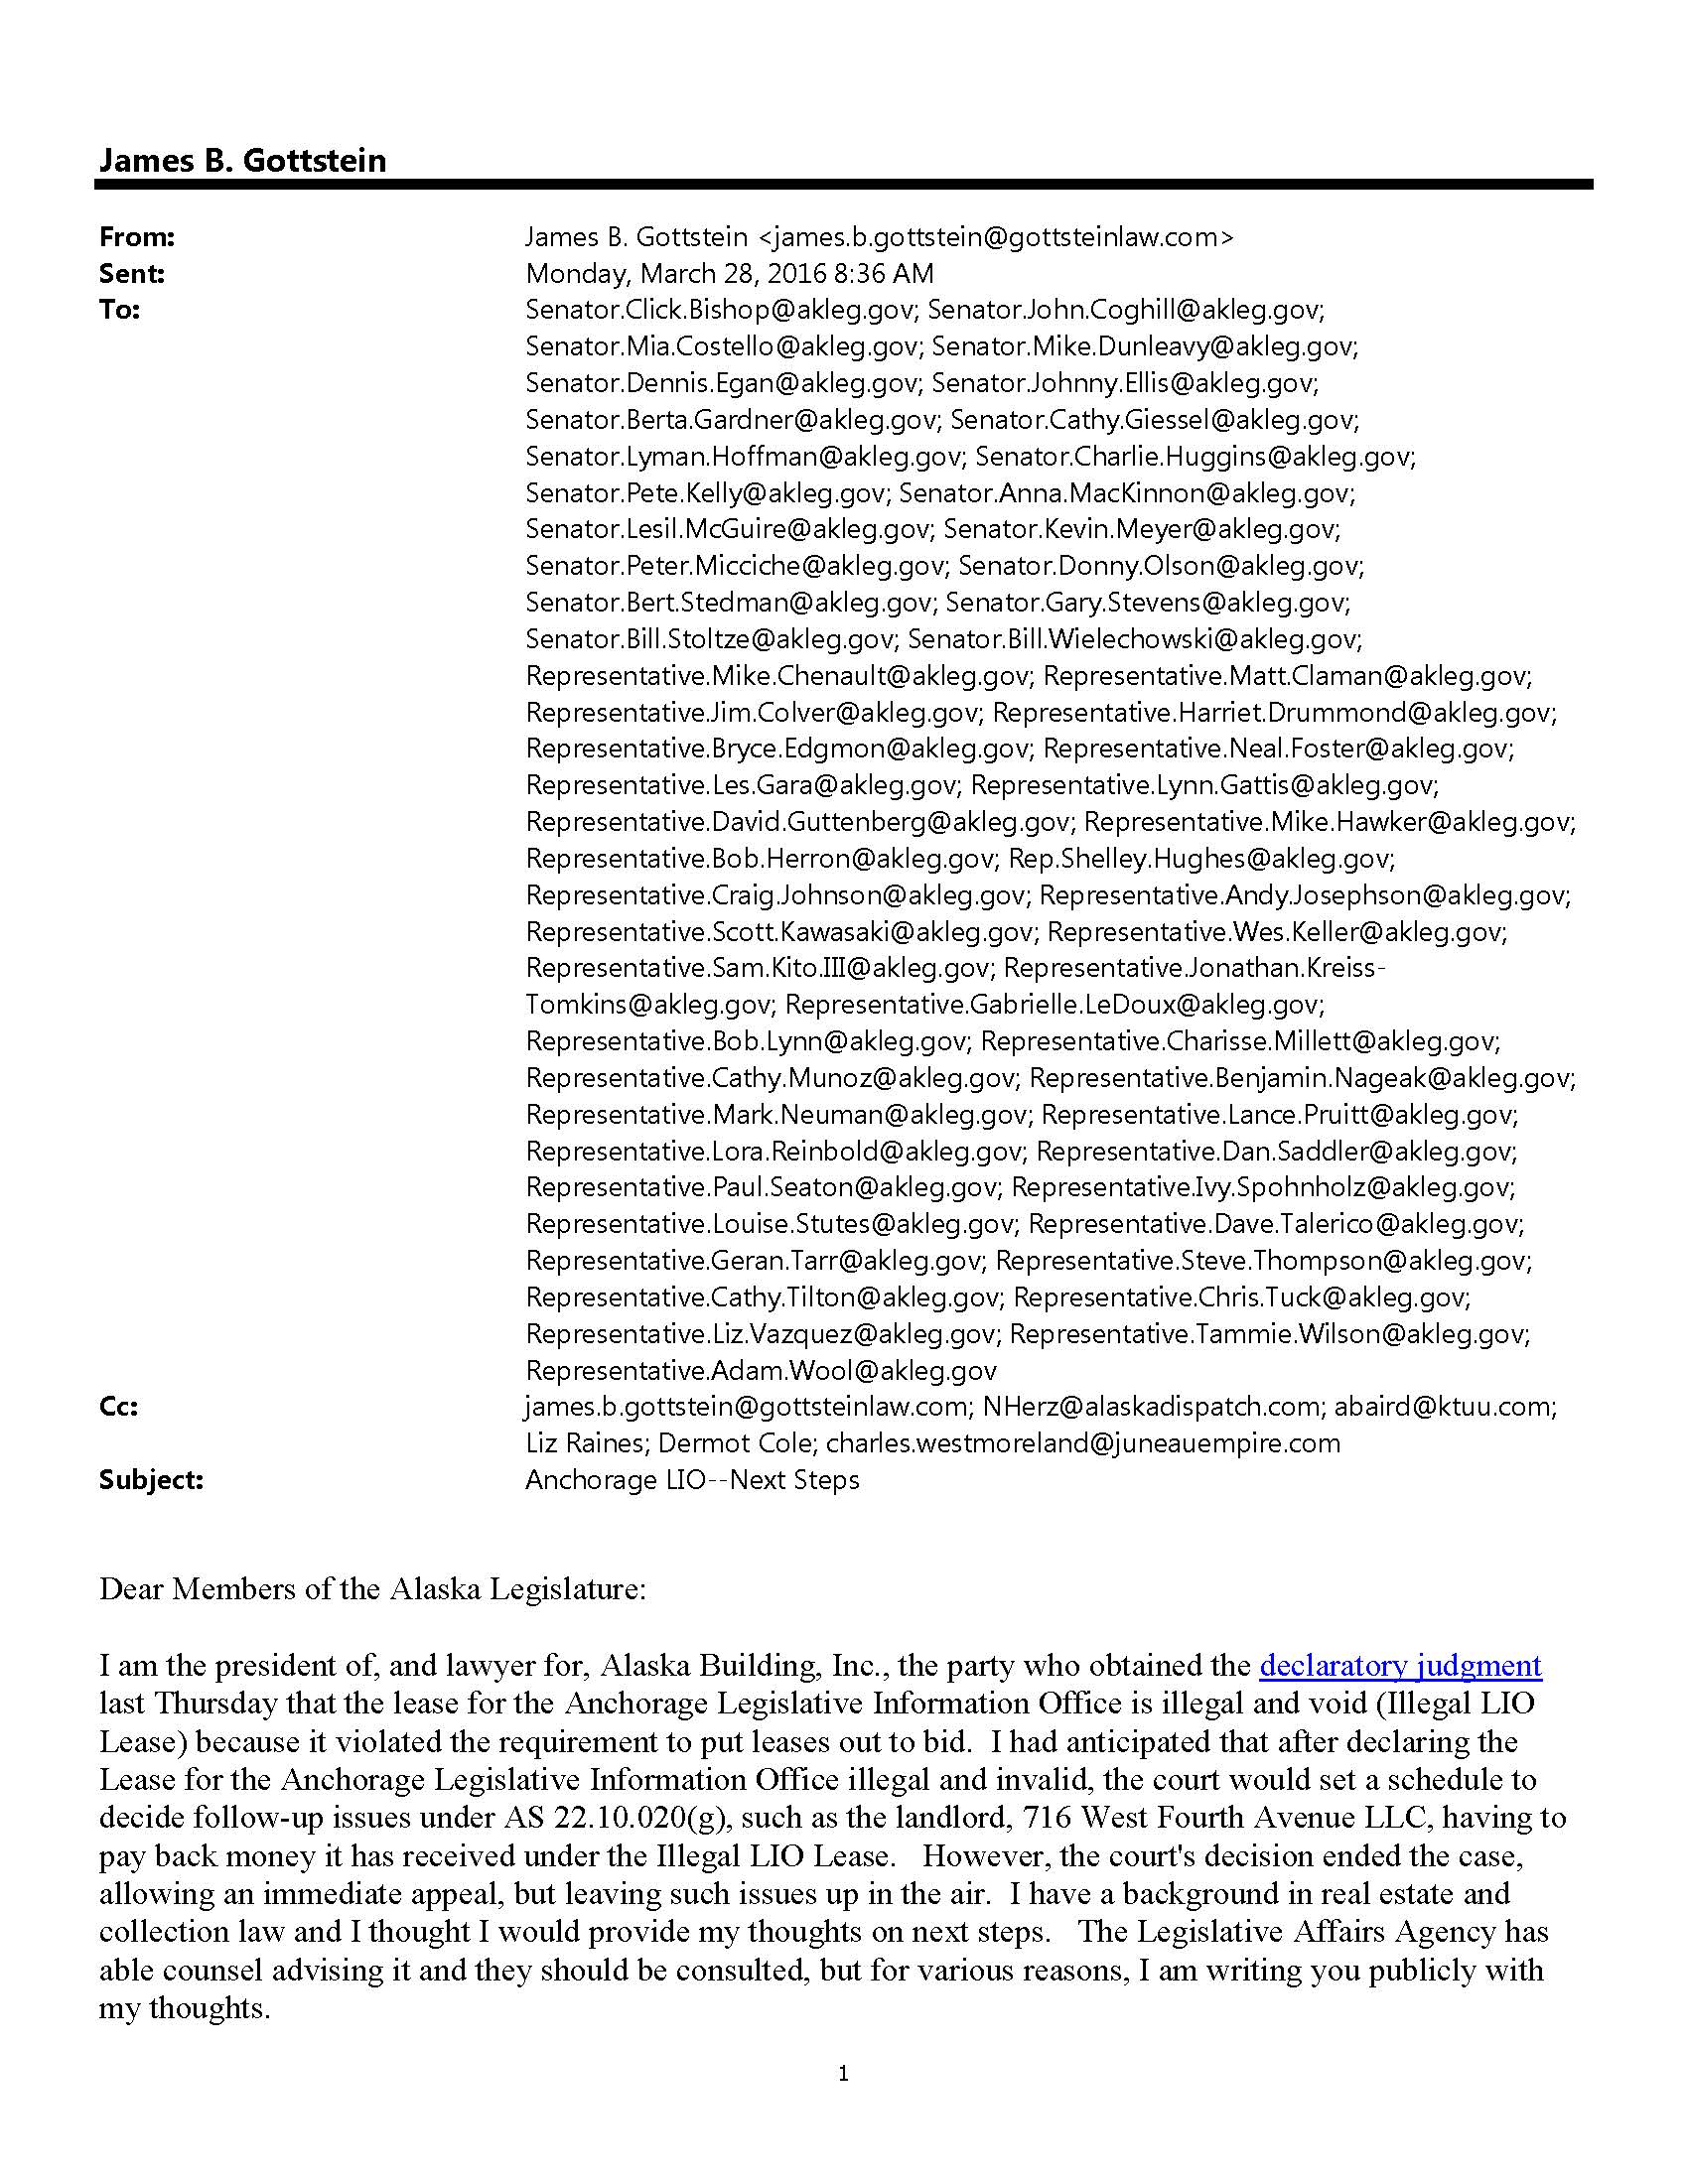 3/28/16 e-mail to Legislature Page 1